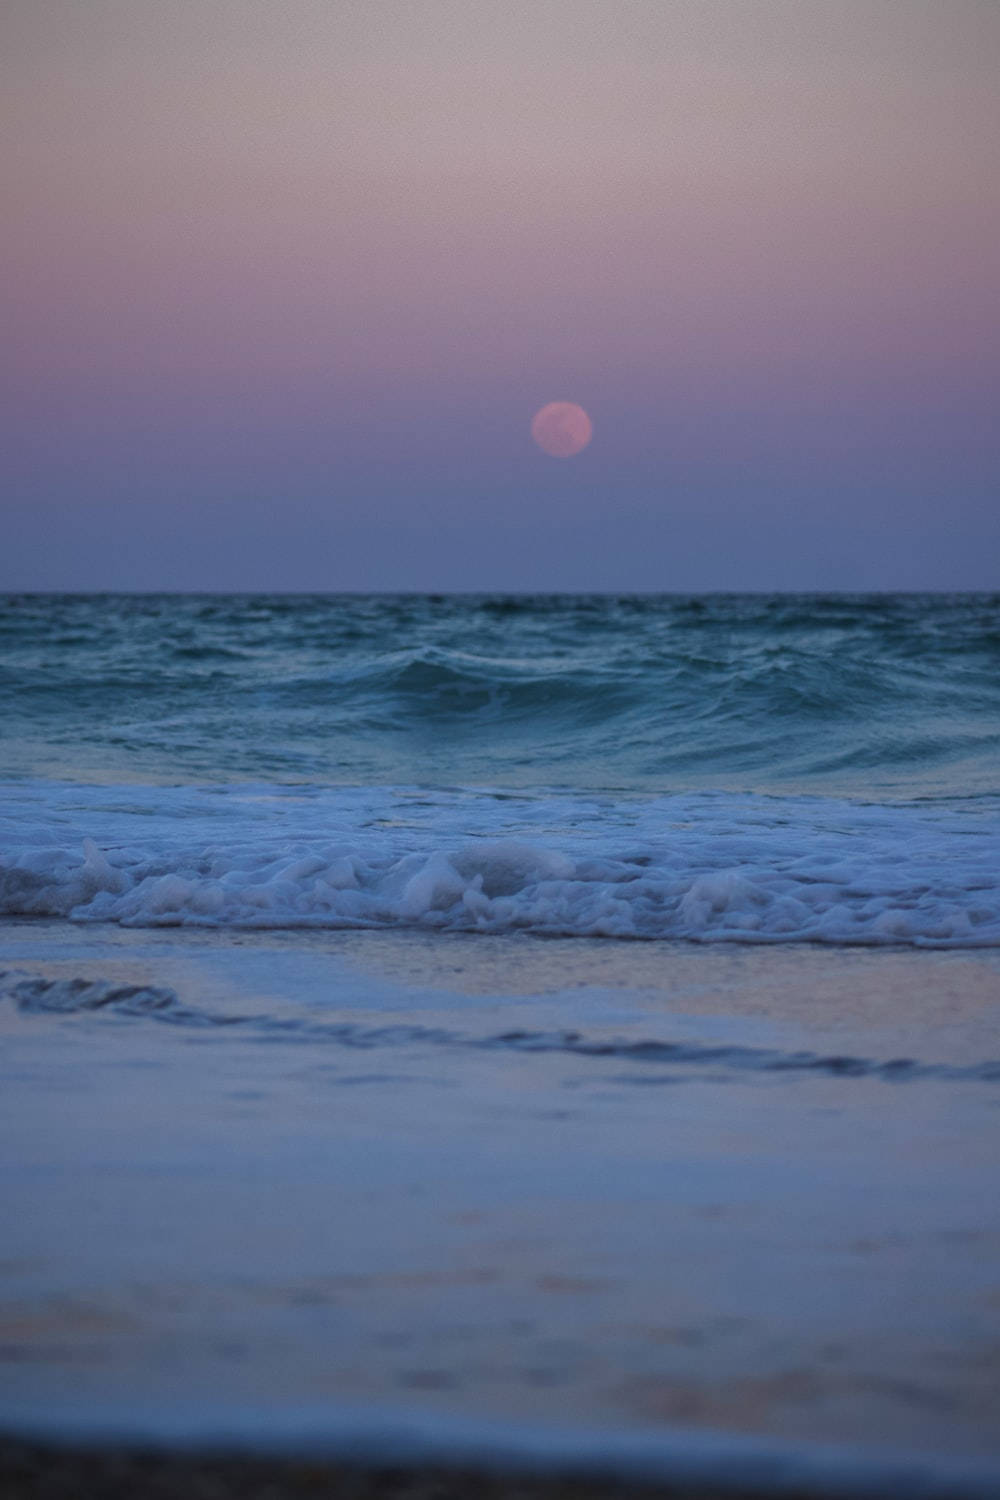 Caption: Enchanting Serenity - A Calm Aesthetic Beach At Night.